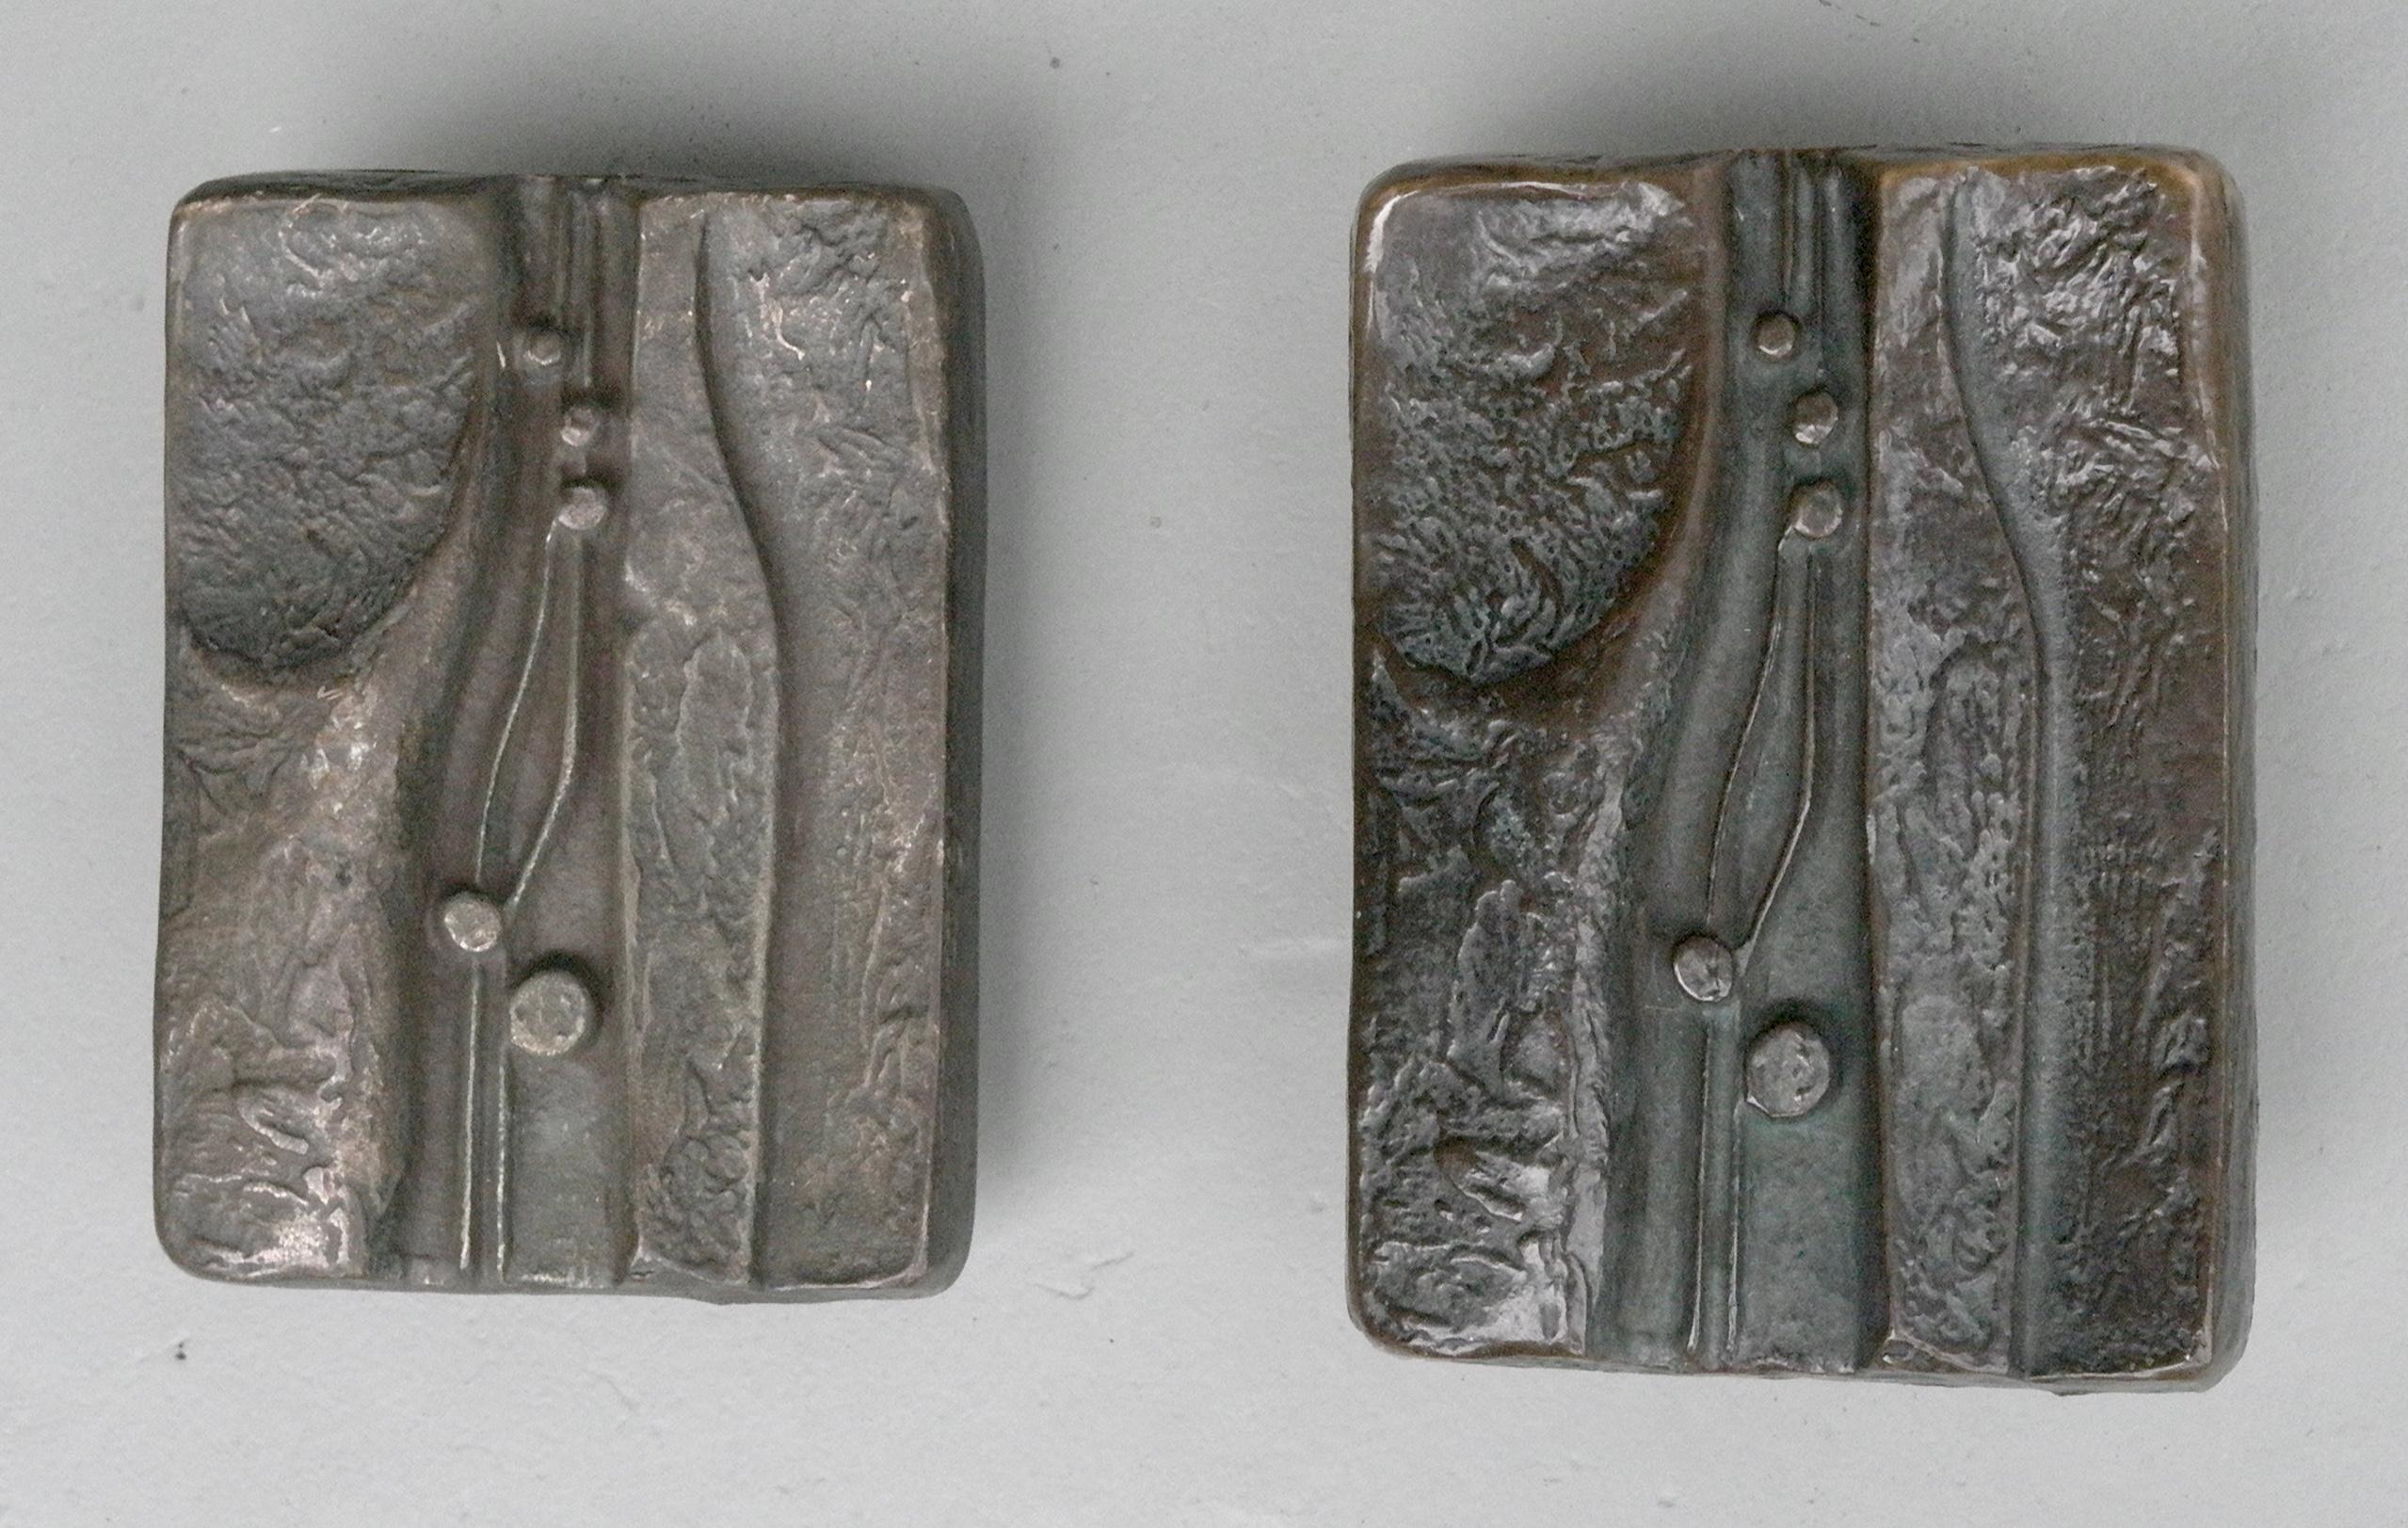 Set of sculptural organic bronze and brass art door handles, mailbox and keyhole, 1960s.

Complete set: door handles, mailbox and keyhole.
Sizes: Door handles 16.5cm x 12cm x 5, mailbox 29cm x 8cm x 3cm, keyhole 6cm x 6cm.